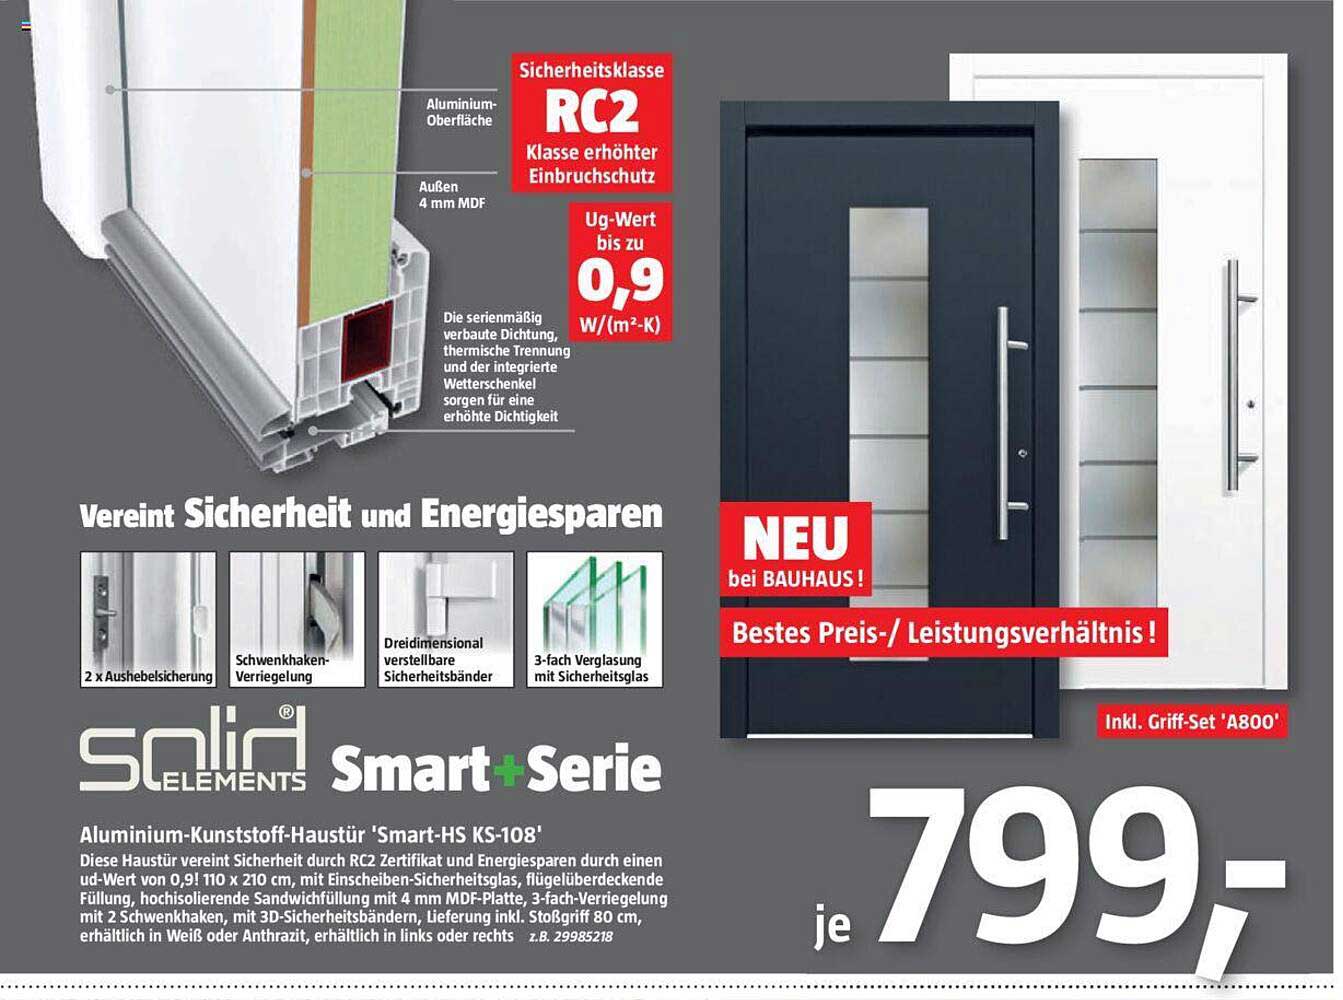 Bauhaus Solid Smart+serie Aluminium-kunststoff-haustür 'smart-hs Ks-108'